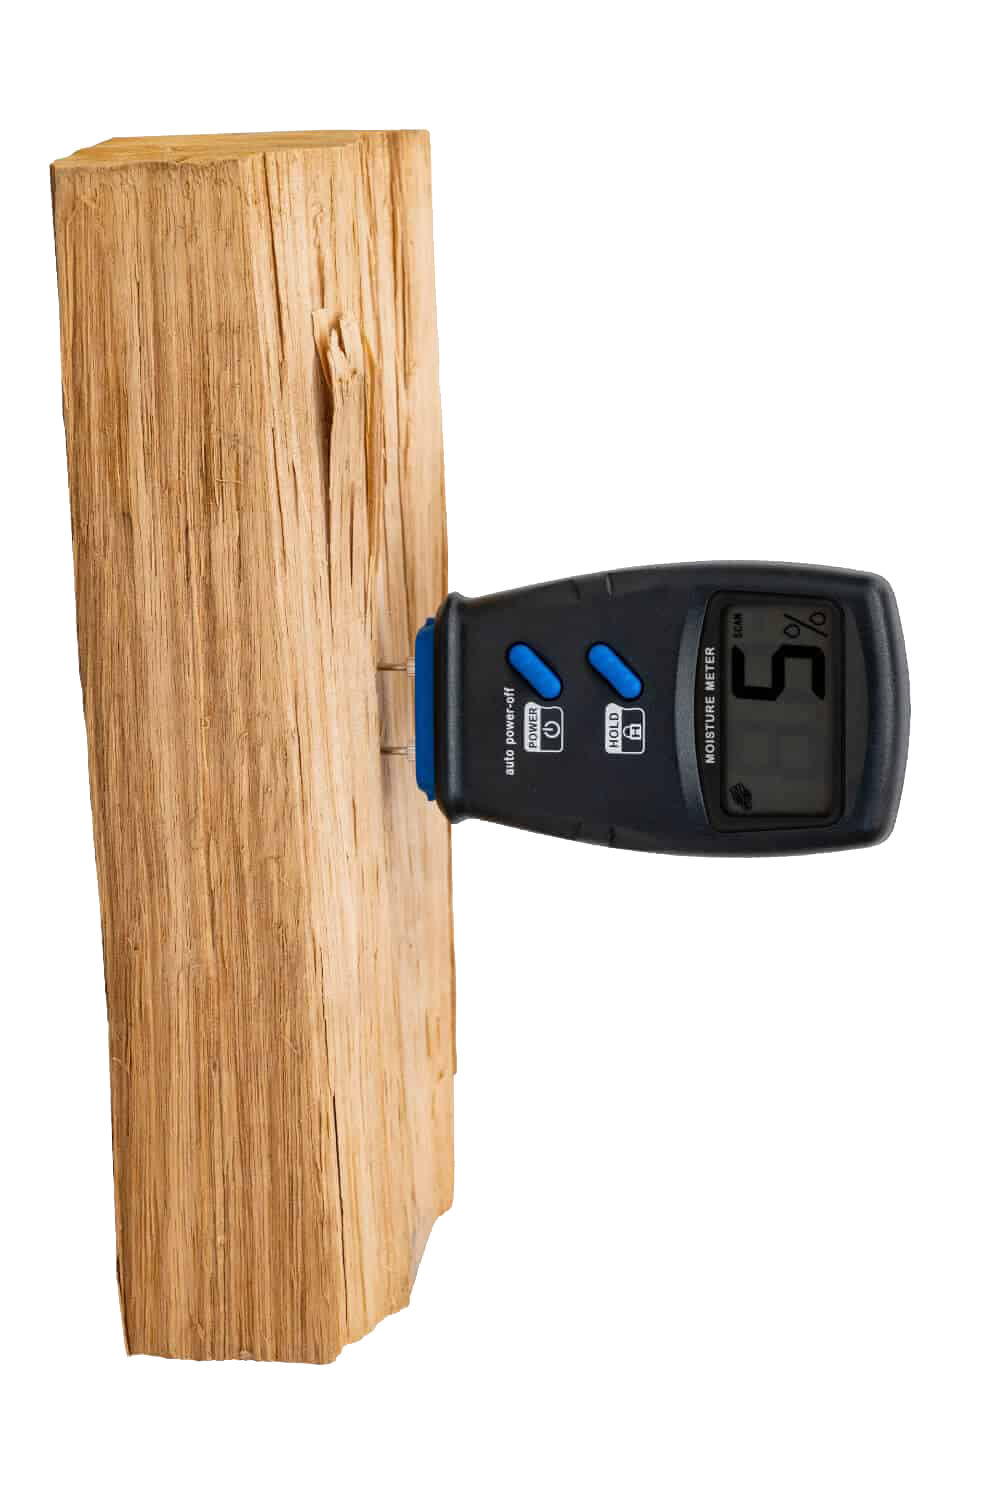 Pyroclassic Moisture Meter measuring wood moisture